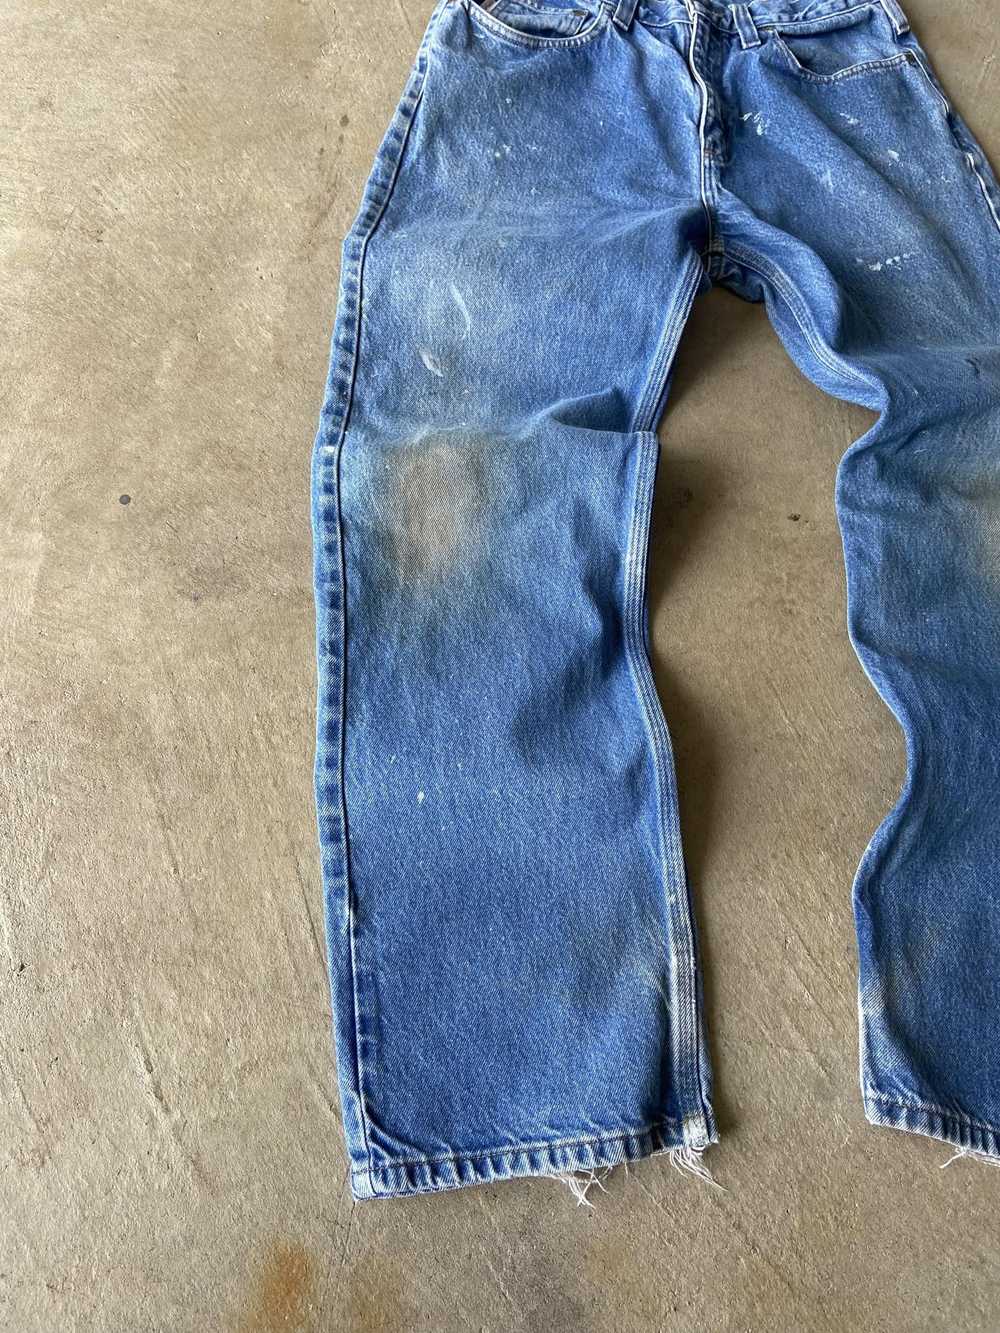 Carhartt Carhartt Thrashed Painter's Blue Jeans - image 2